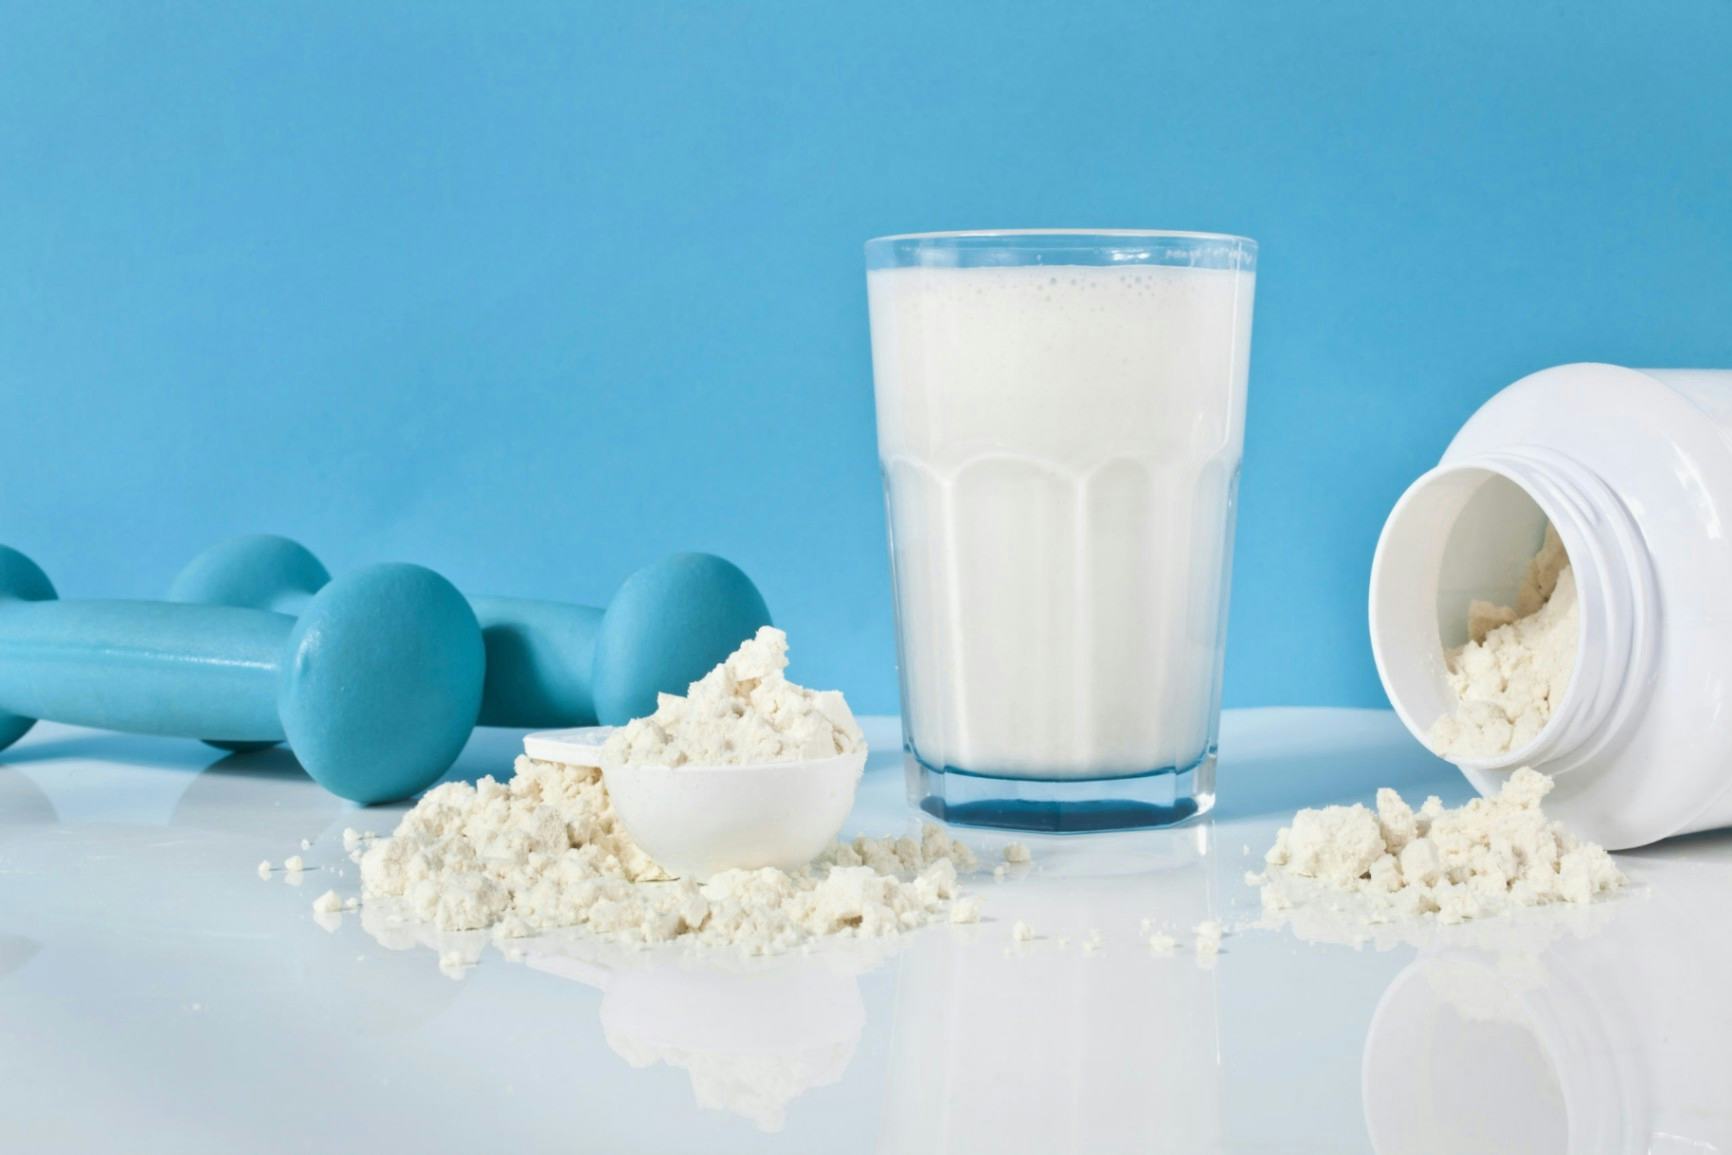 SL milk powder use dropped more than half 